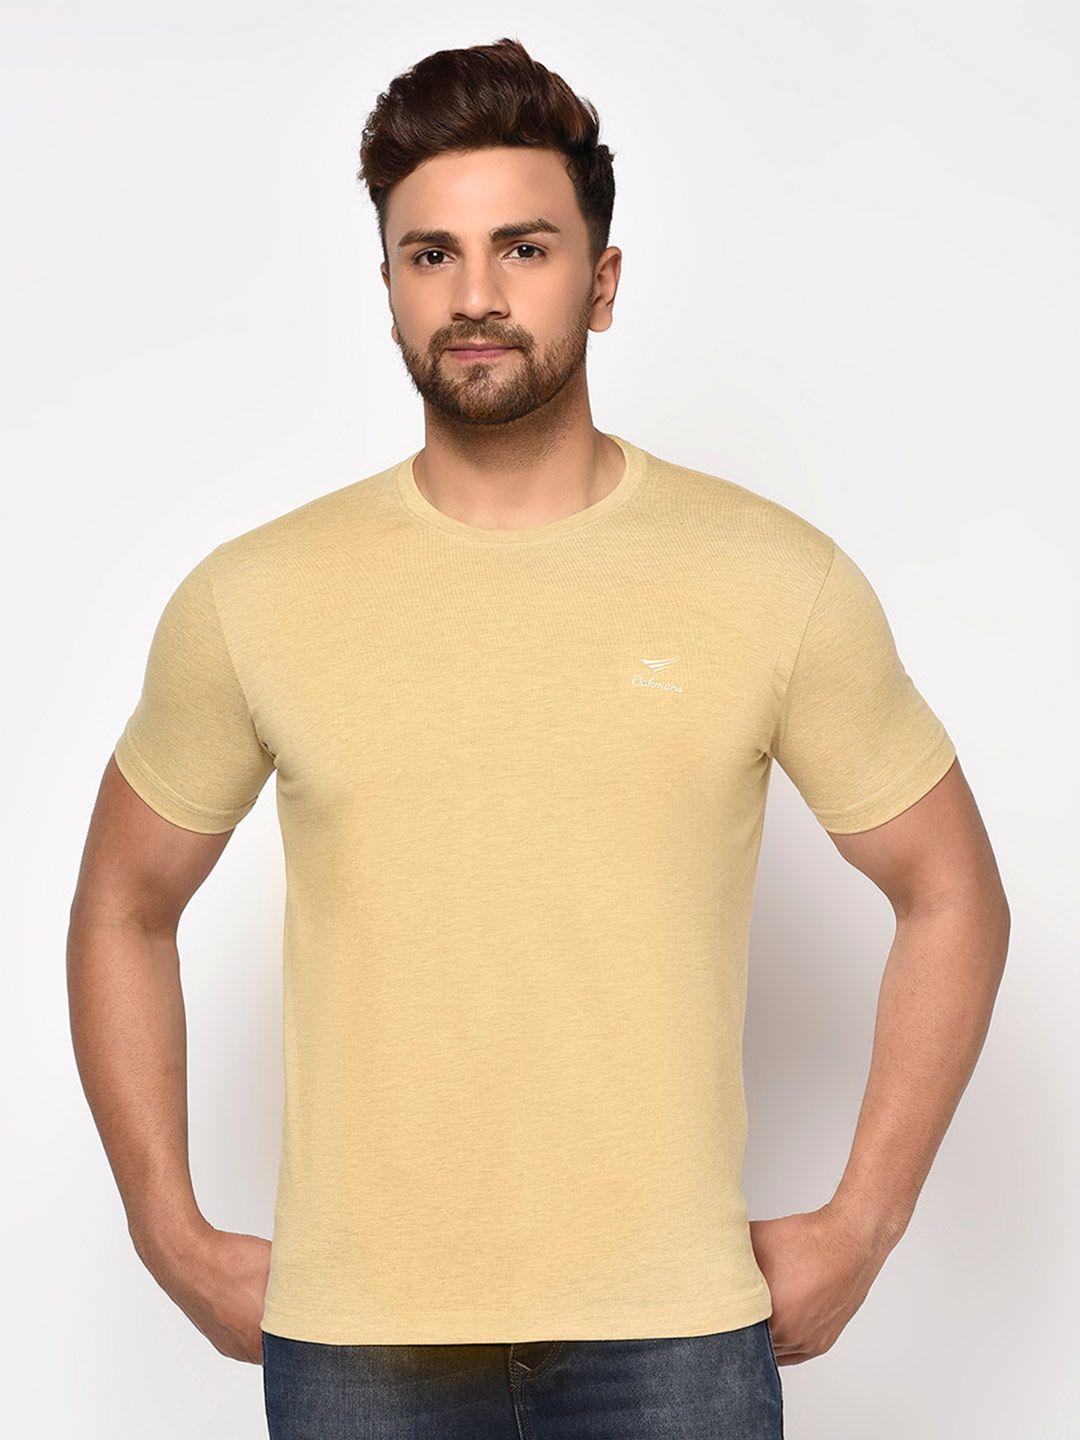 oakmans round neck short sleeves cotton t-shirt